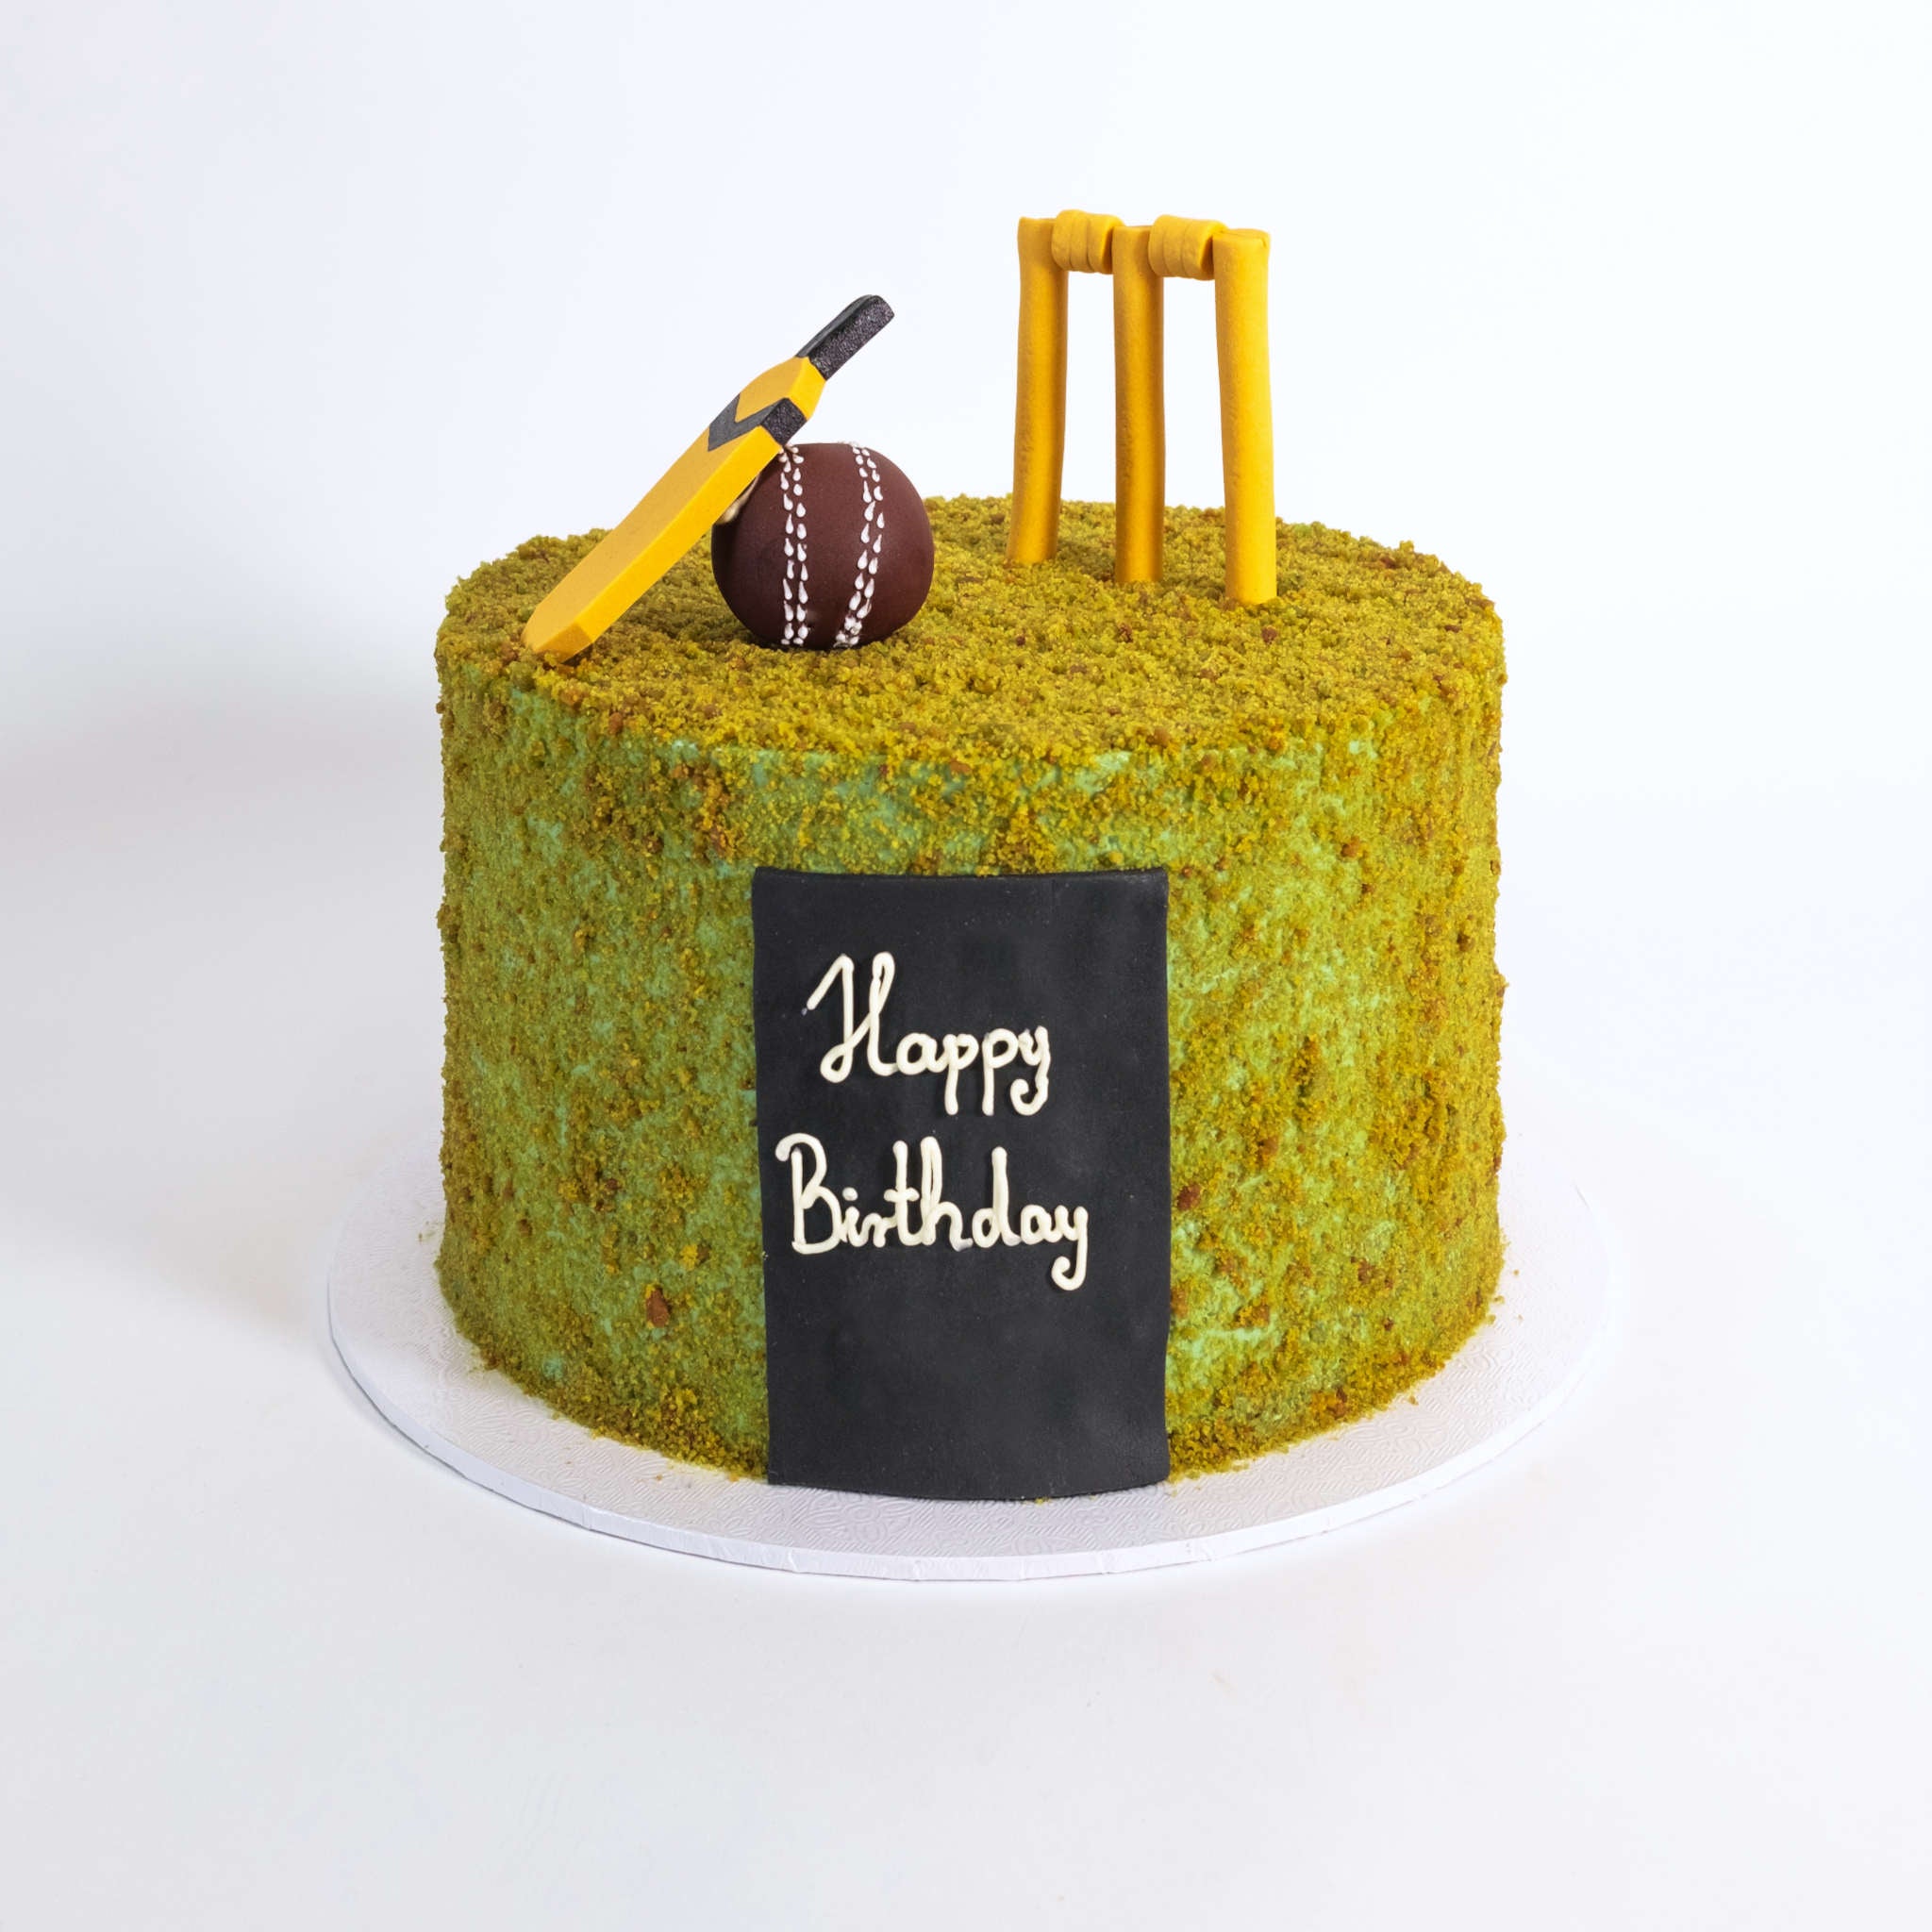 Cricket Cake #2